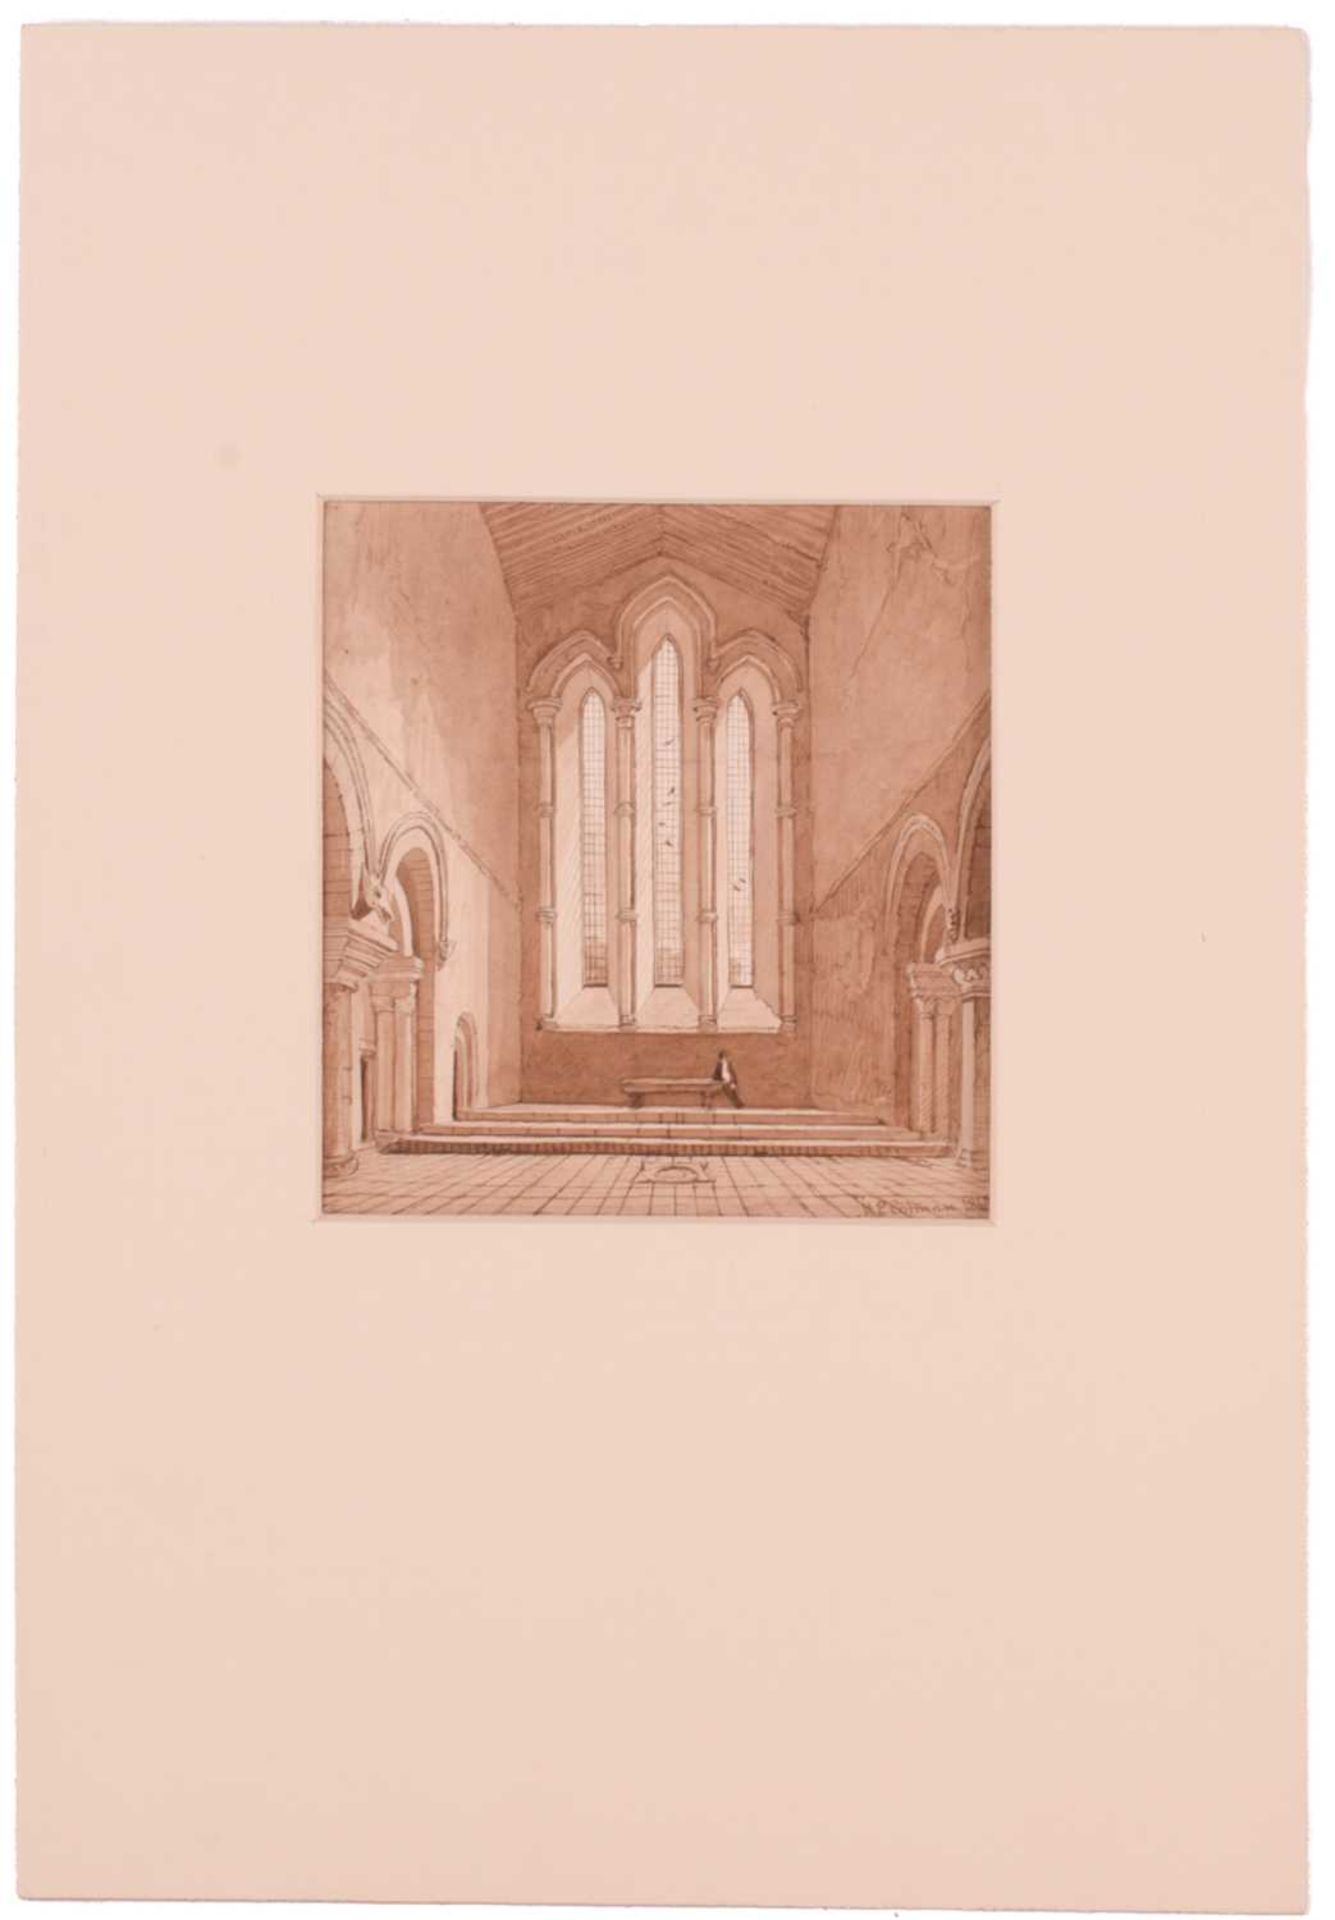 Miles Edmund Cotman (1810 - 1858), 'Emneth Church interior', signed & dated 1840, monochrome